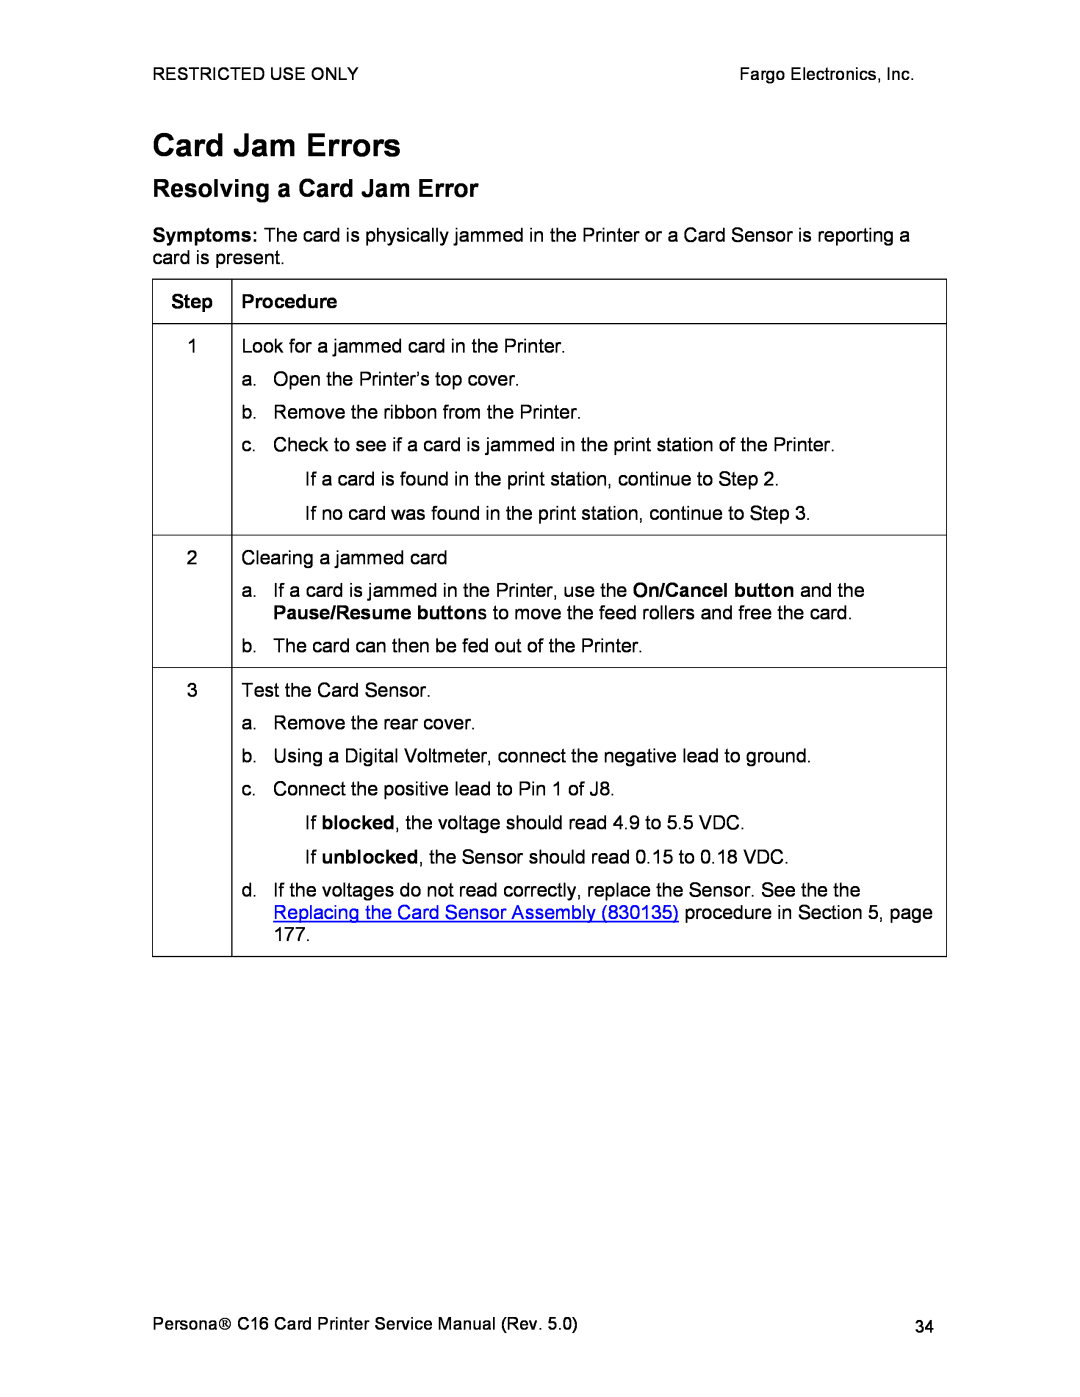 FARGO electronic C16 service manual Card Jam Errors, Resolving a Card Jam Error 